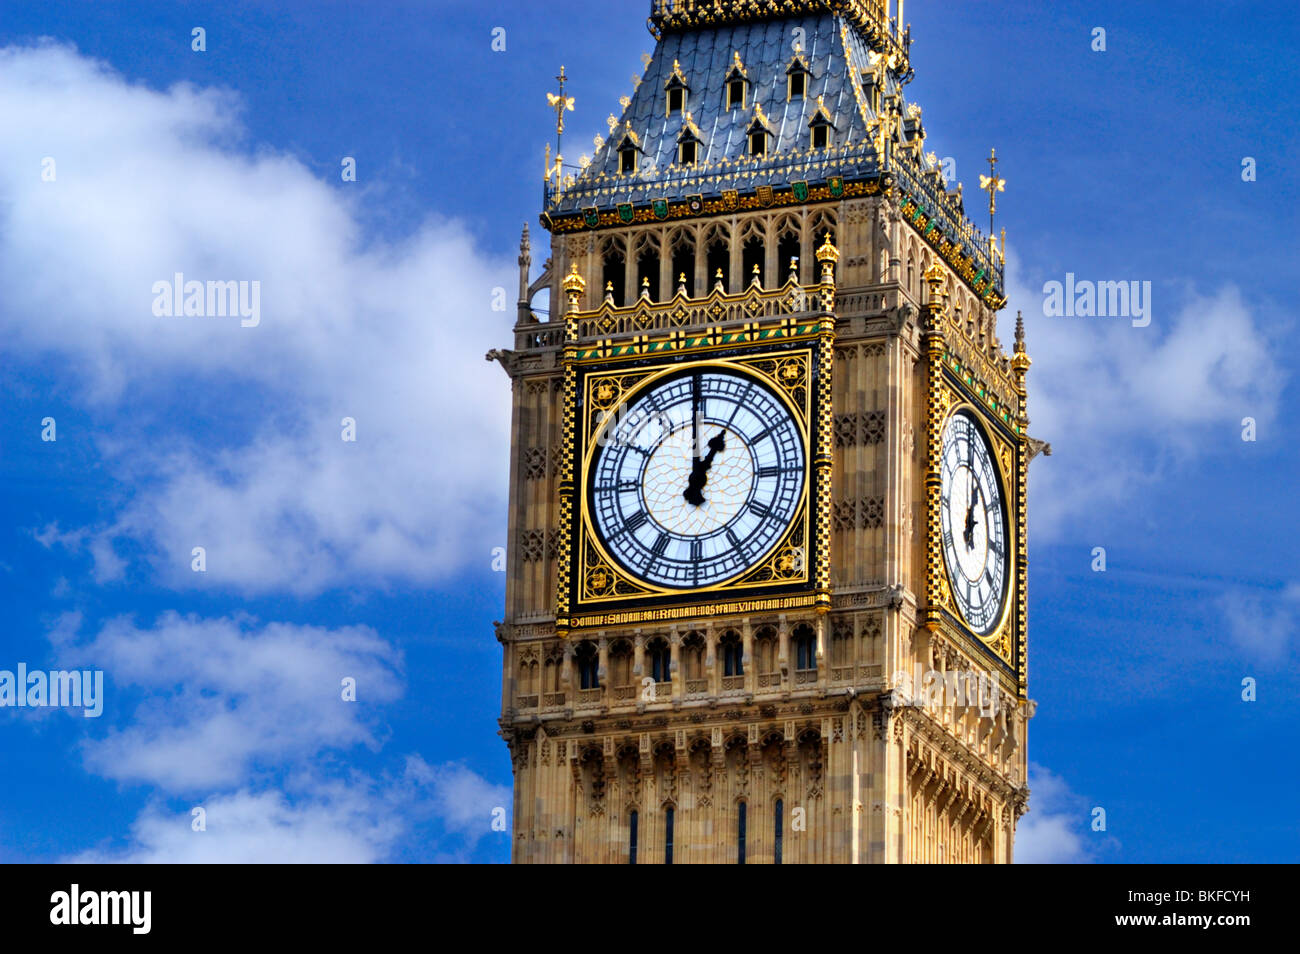 Big Ben (St Stephen's Tower) Clockface, London, England, UK Stock Photo